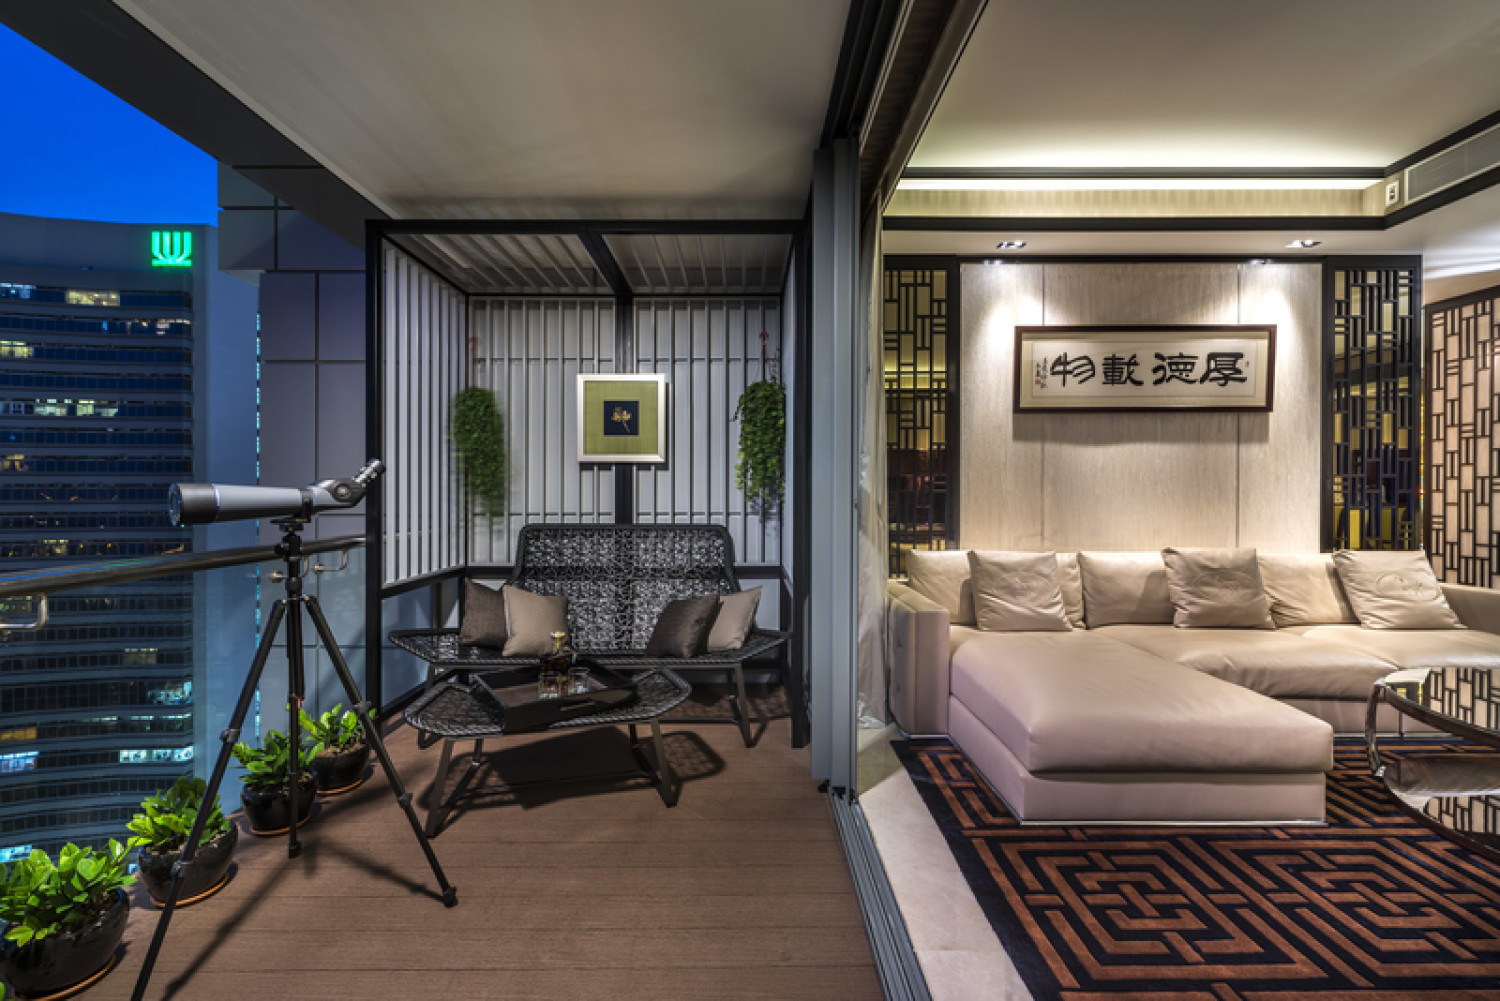 Spaces We Love: Beautiful Balconies In Singaporean Homes - Property News